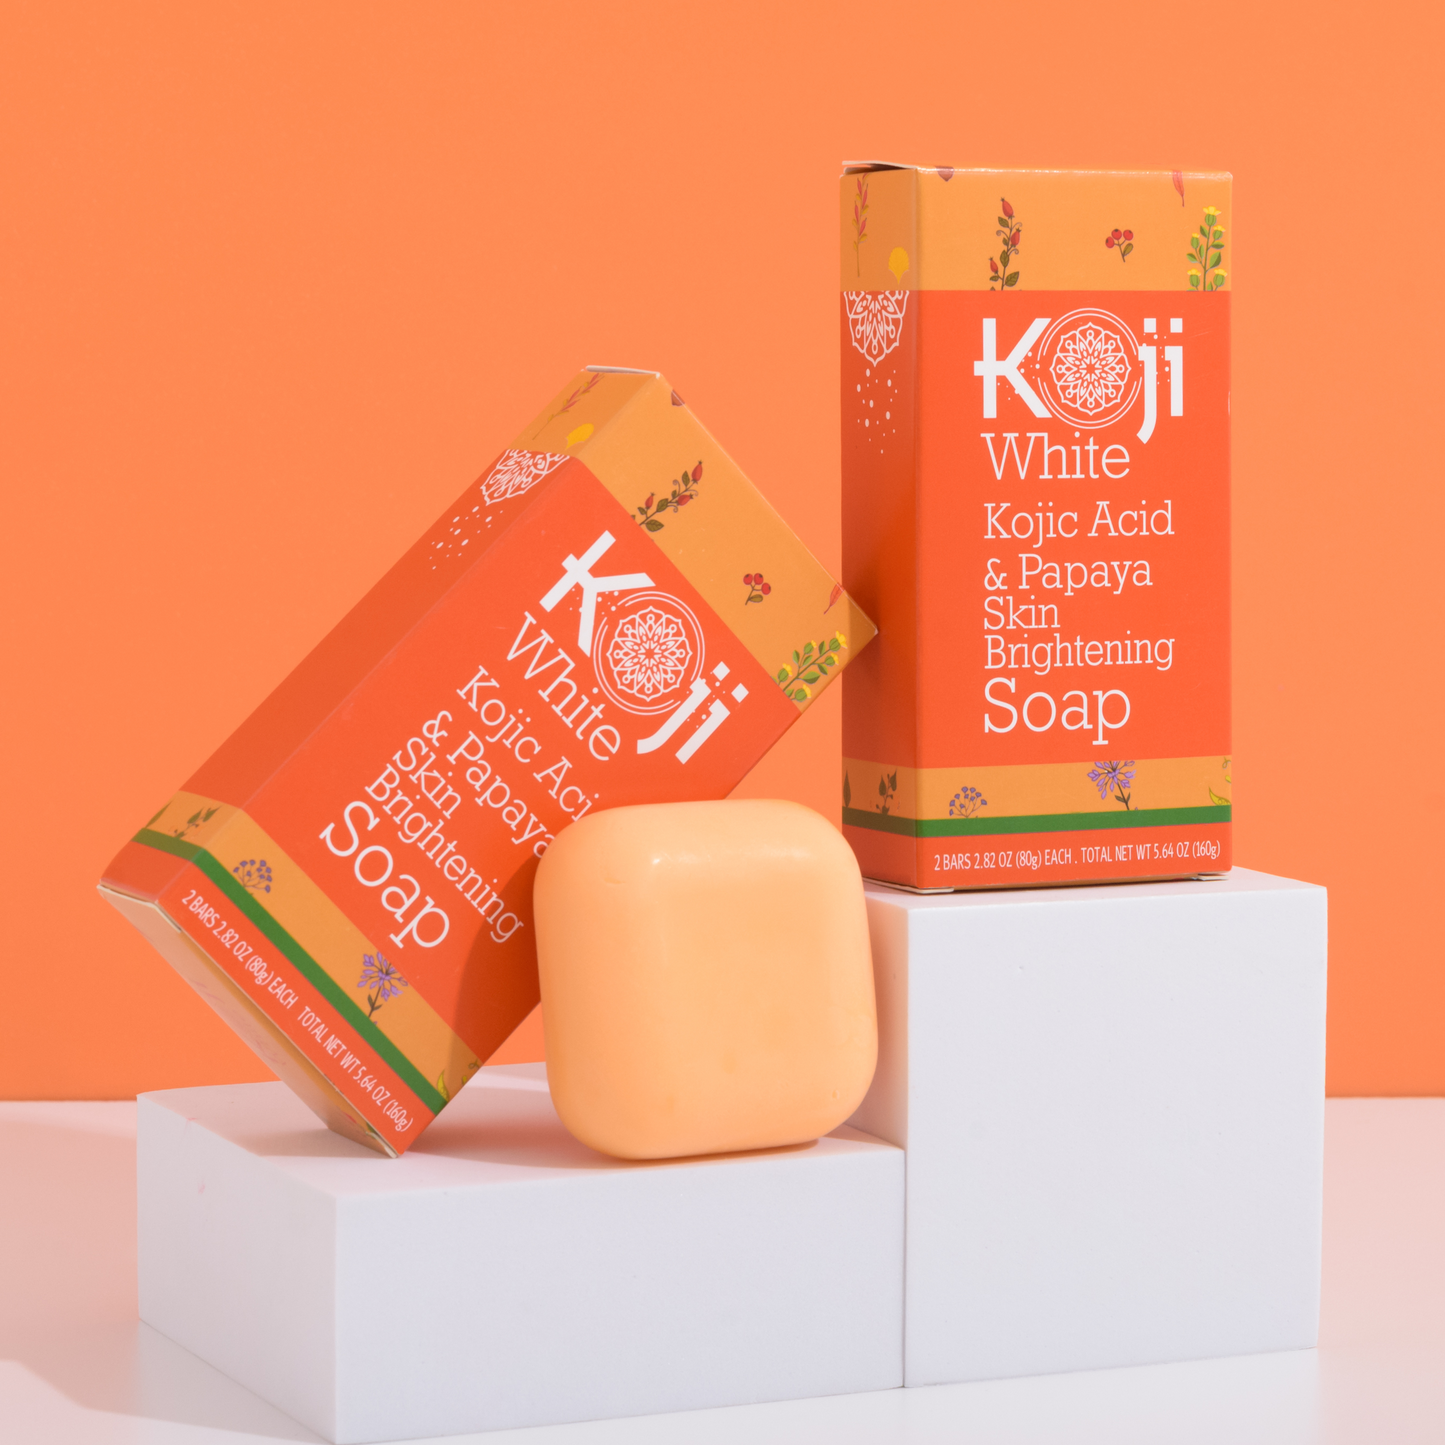 Kojic Acid & Papaya Skin Brightening Soap (2 Bars)